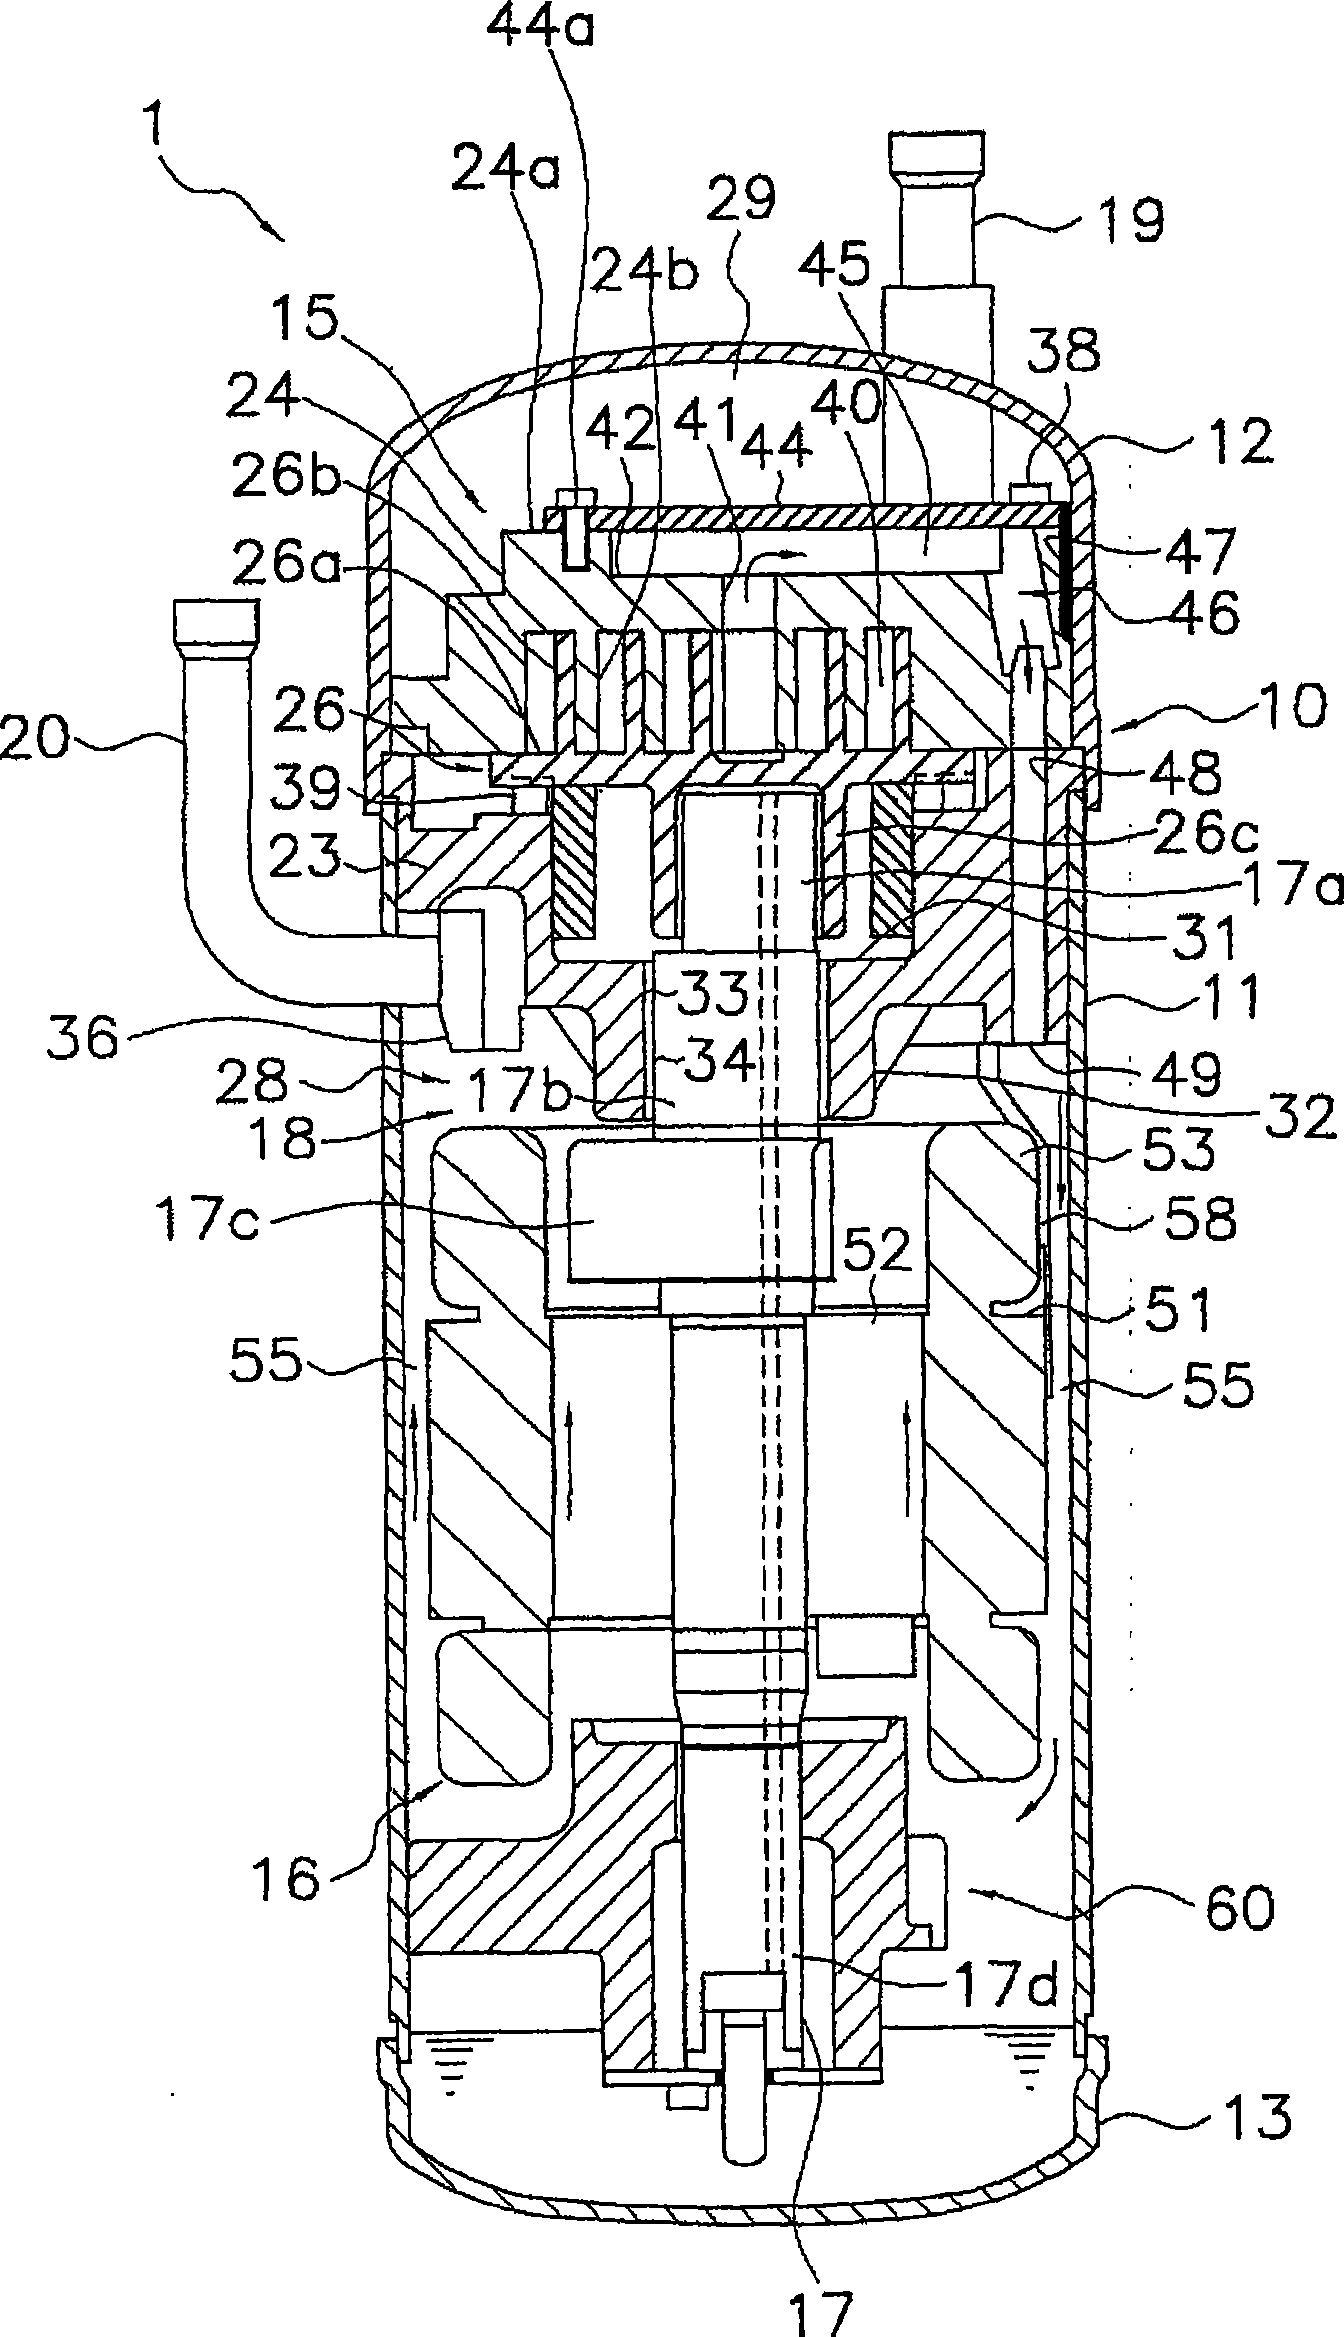 Sliding component of compressor, sliding component base, scroll component, and compressor